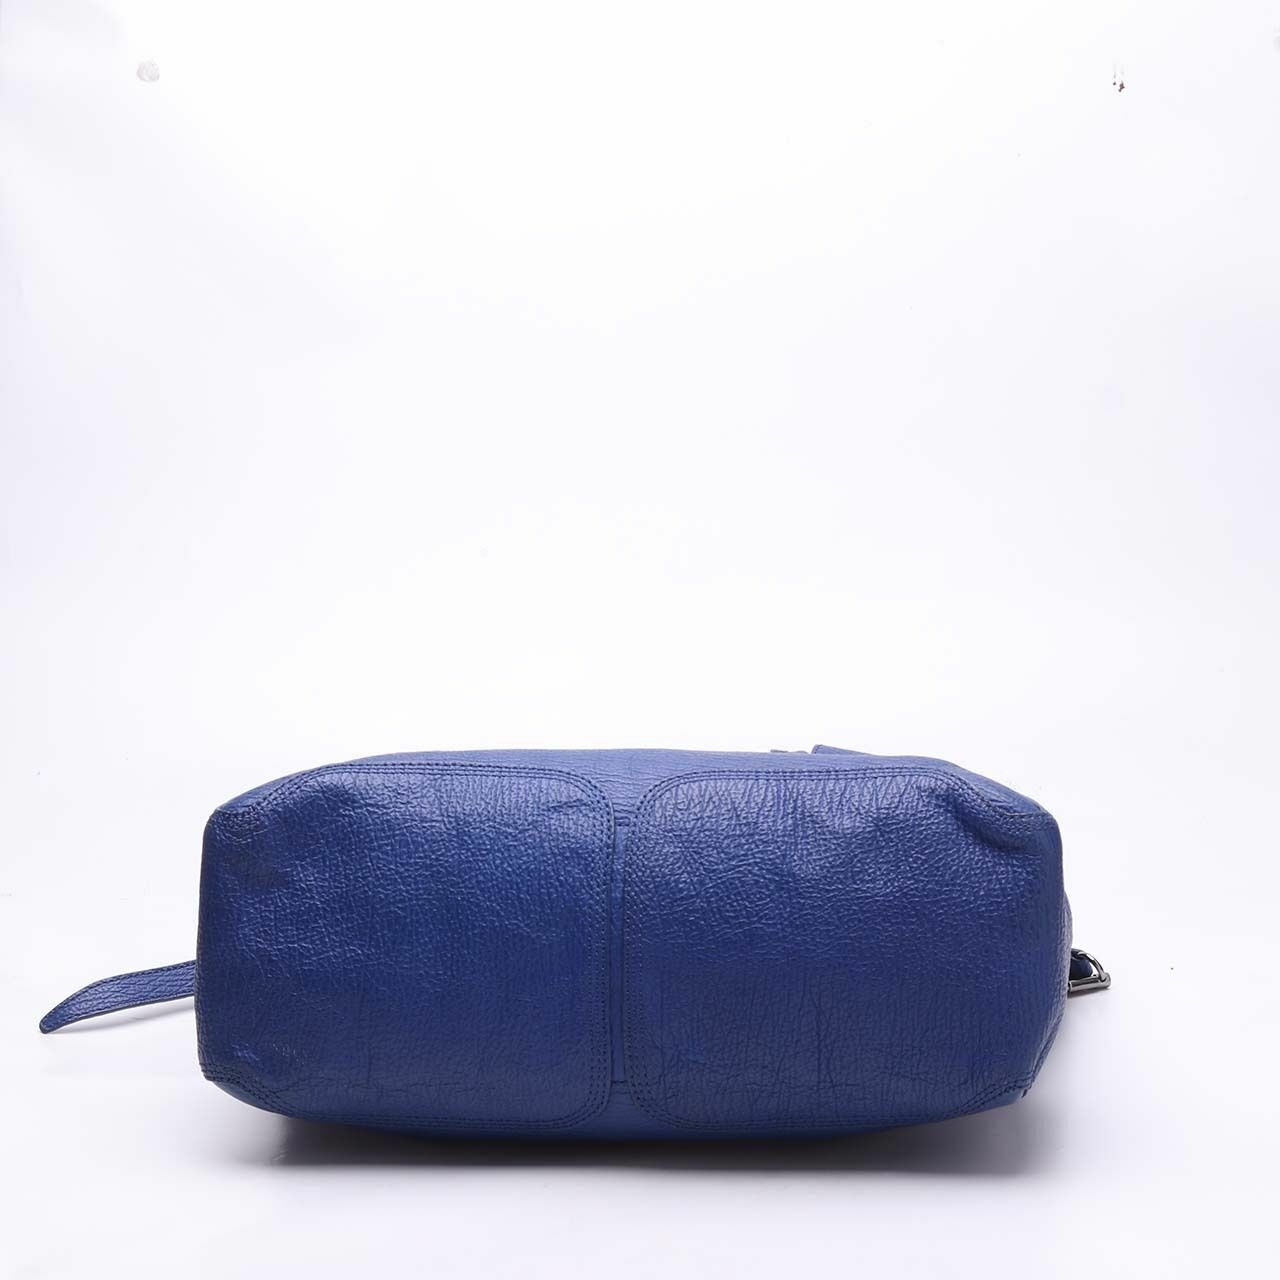 3.1 Phillip Lim Blue Pashli Large Satchel Bag